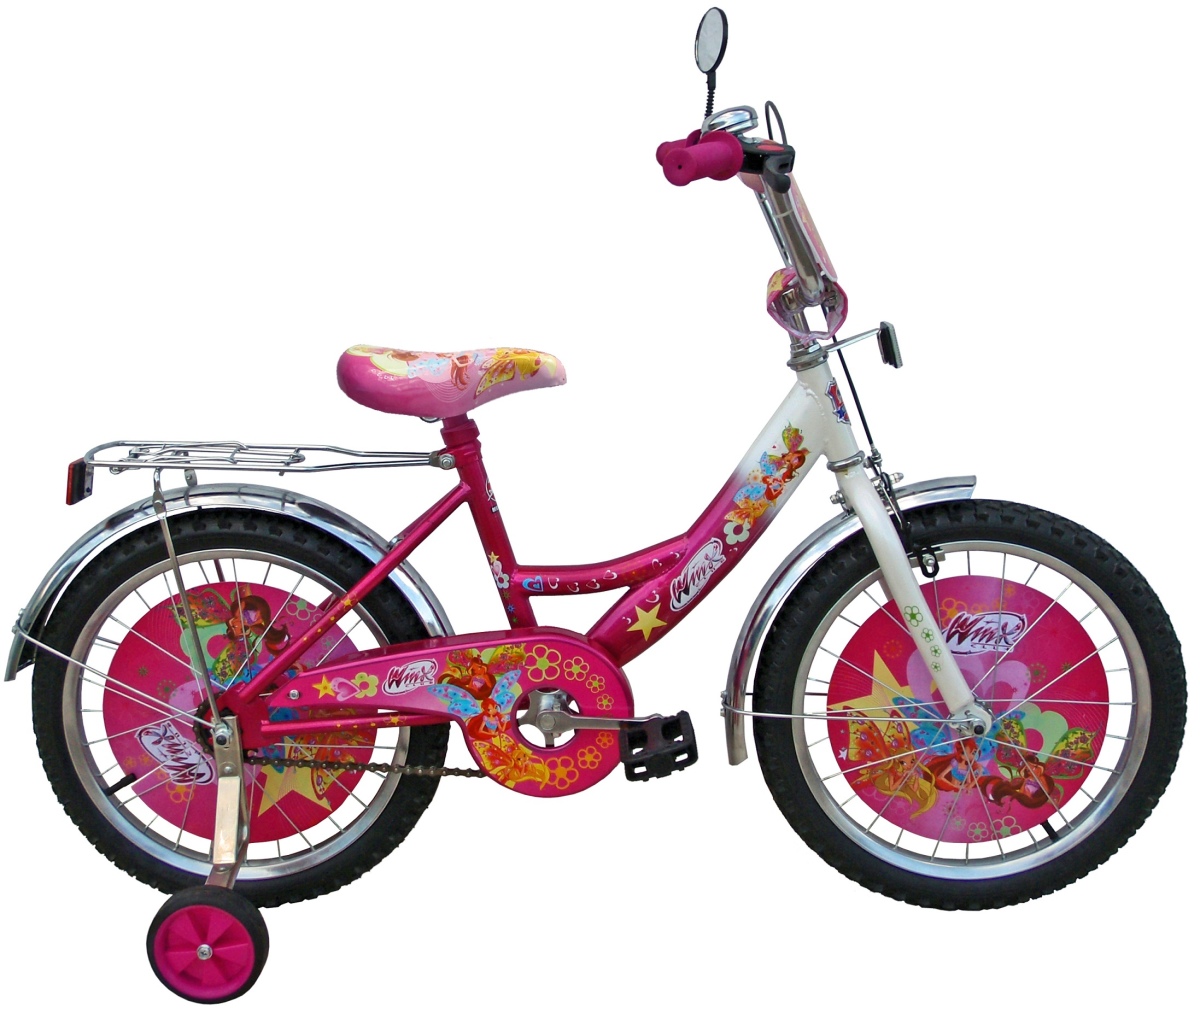 Bicicletas infantis no Aliexpress